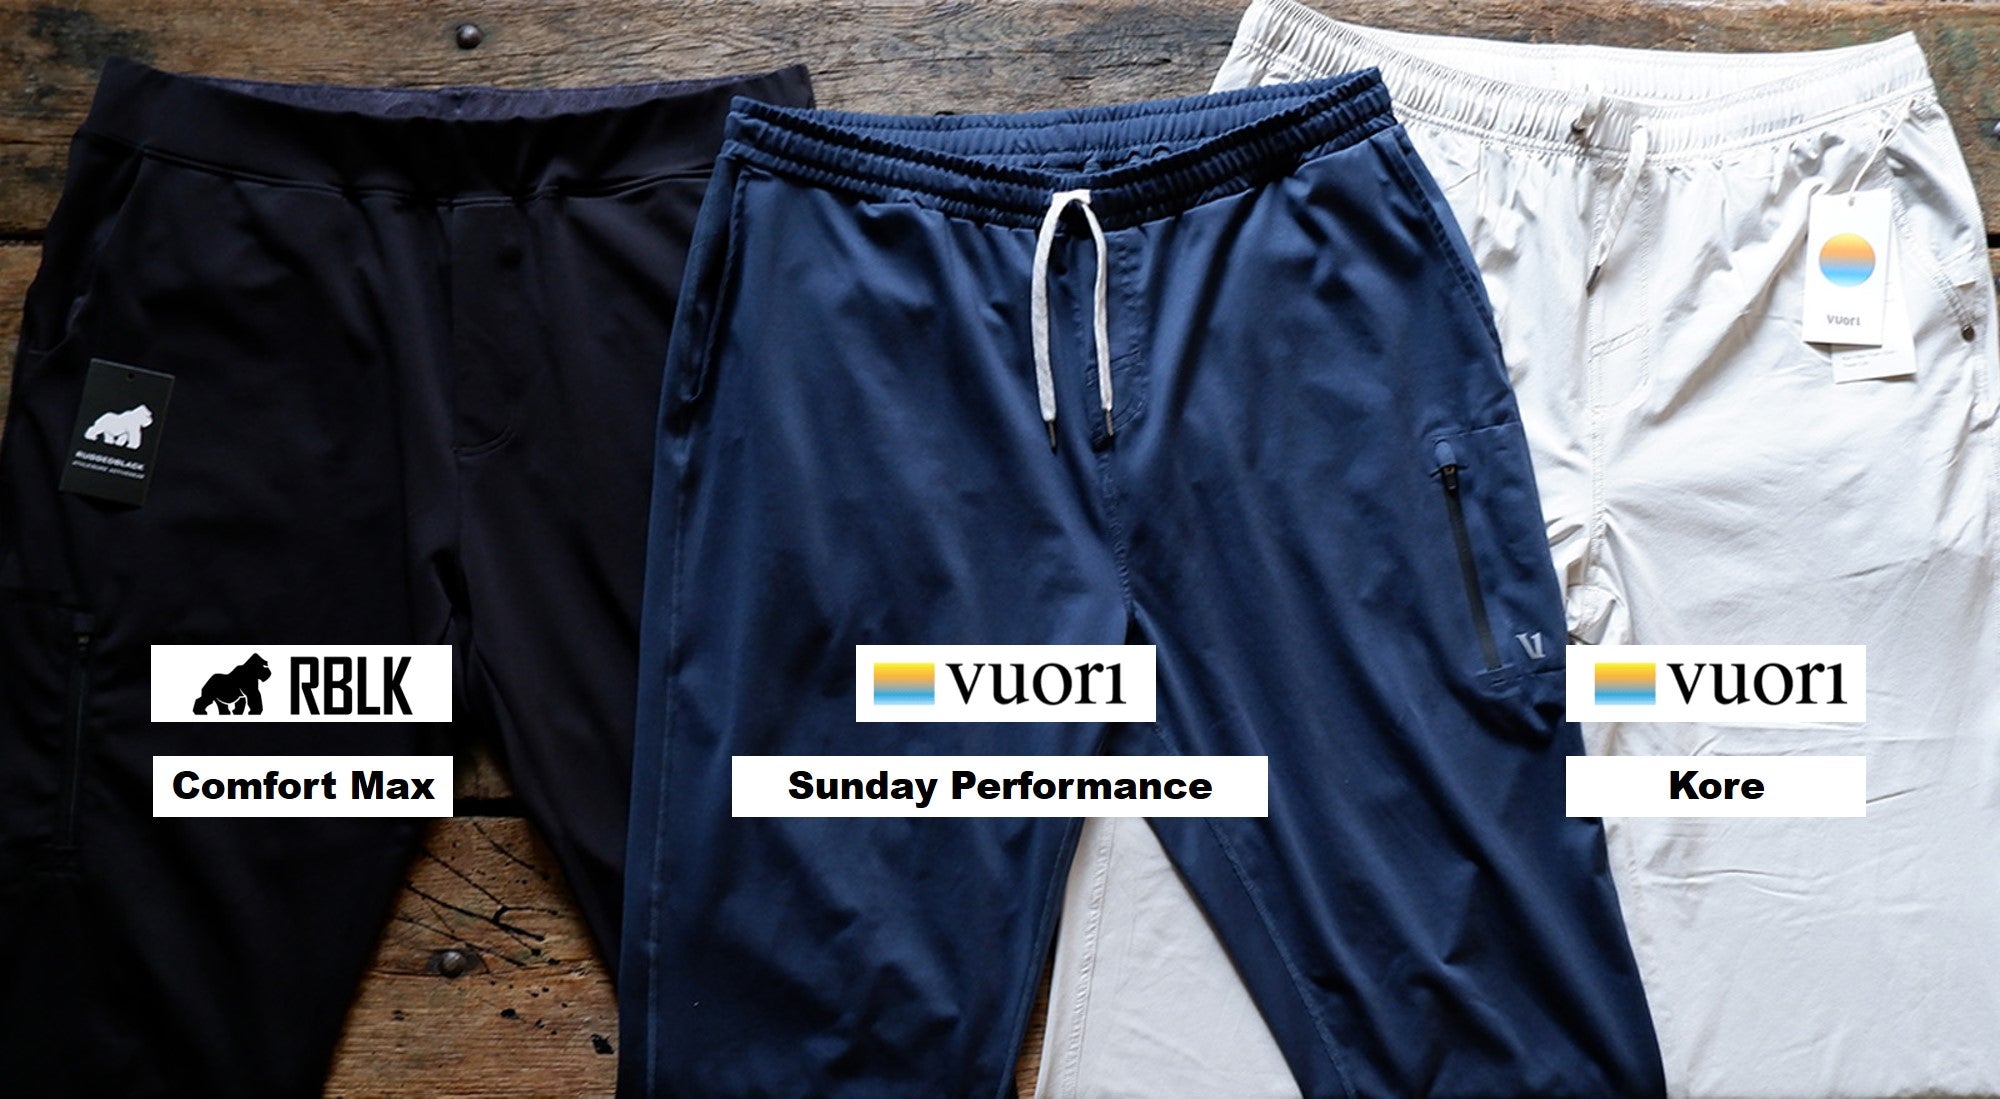 Comfortable & Stylish Performance Apparel Outfits feat. Vuori